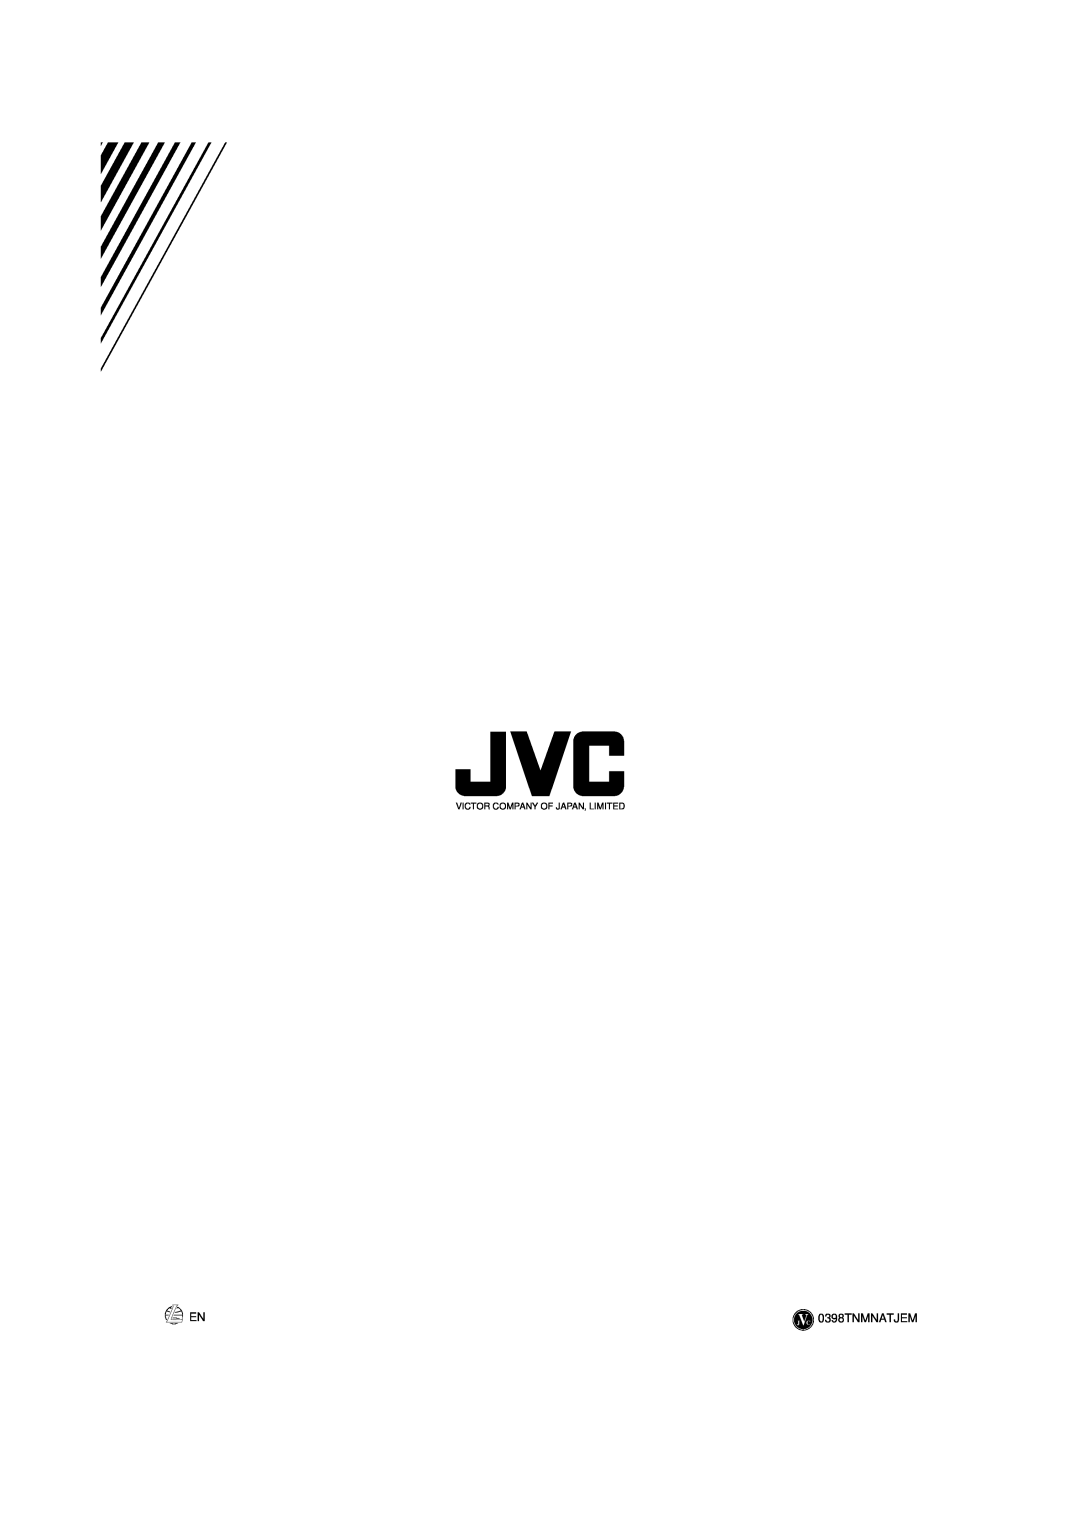 JVC MX-D602T manual 0398TNMNATJEM, Victor Company Of Japan, Limited 